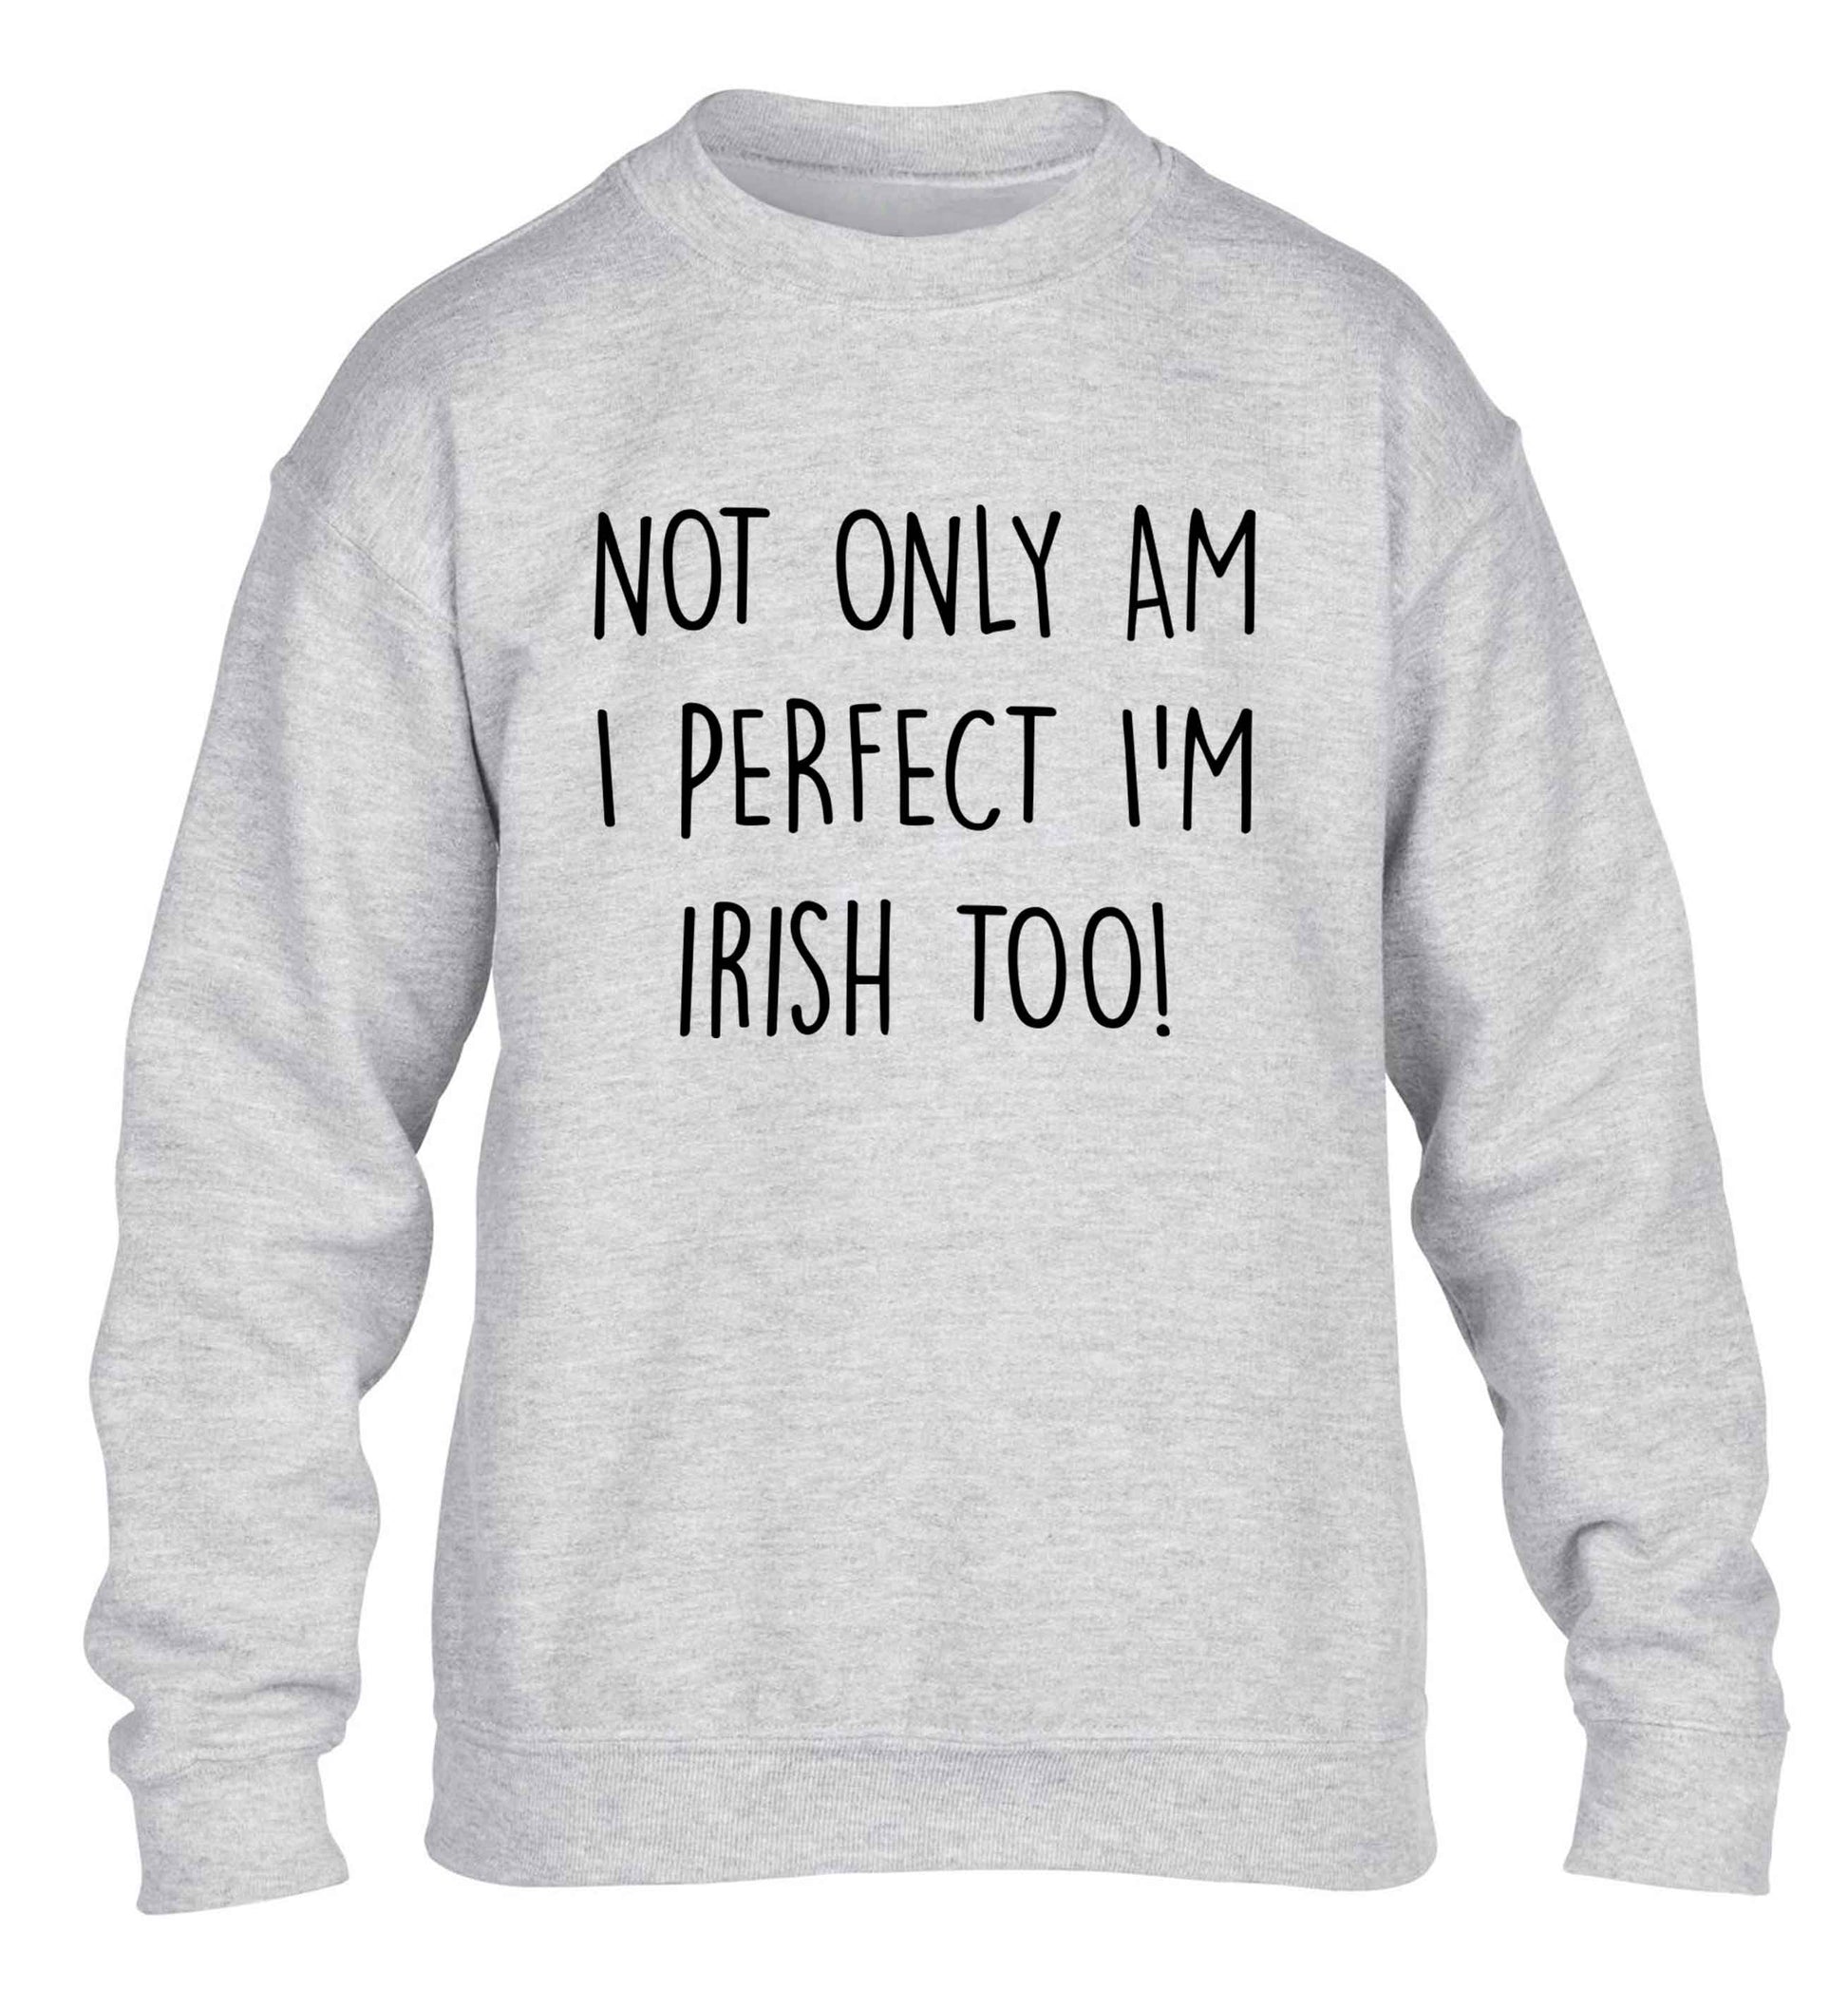 Not only am I perfect I'm Irish too! children's grey sweater 12-13 Years